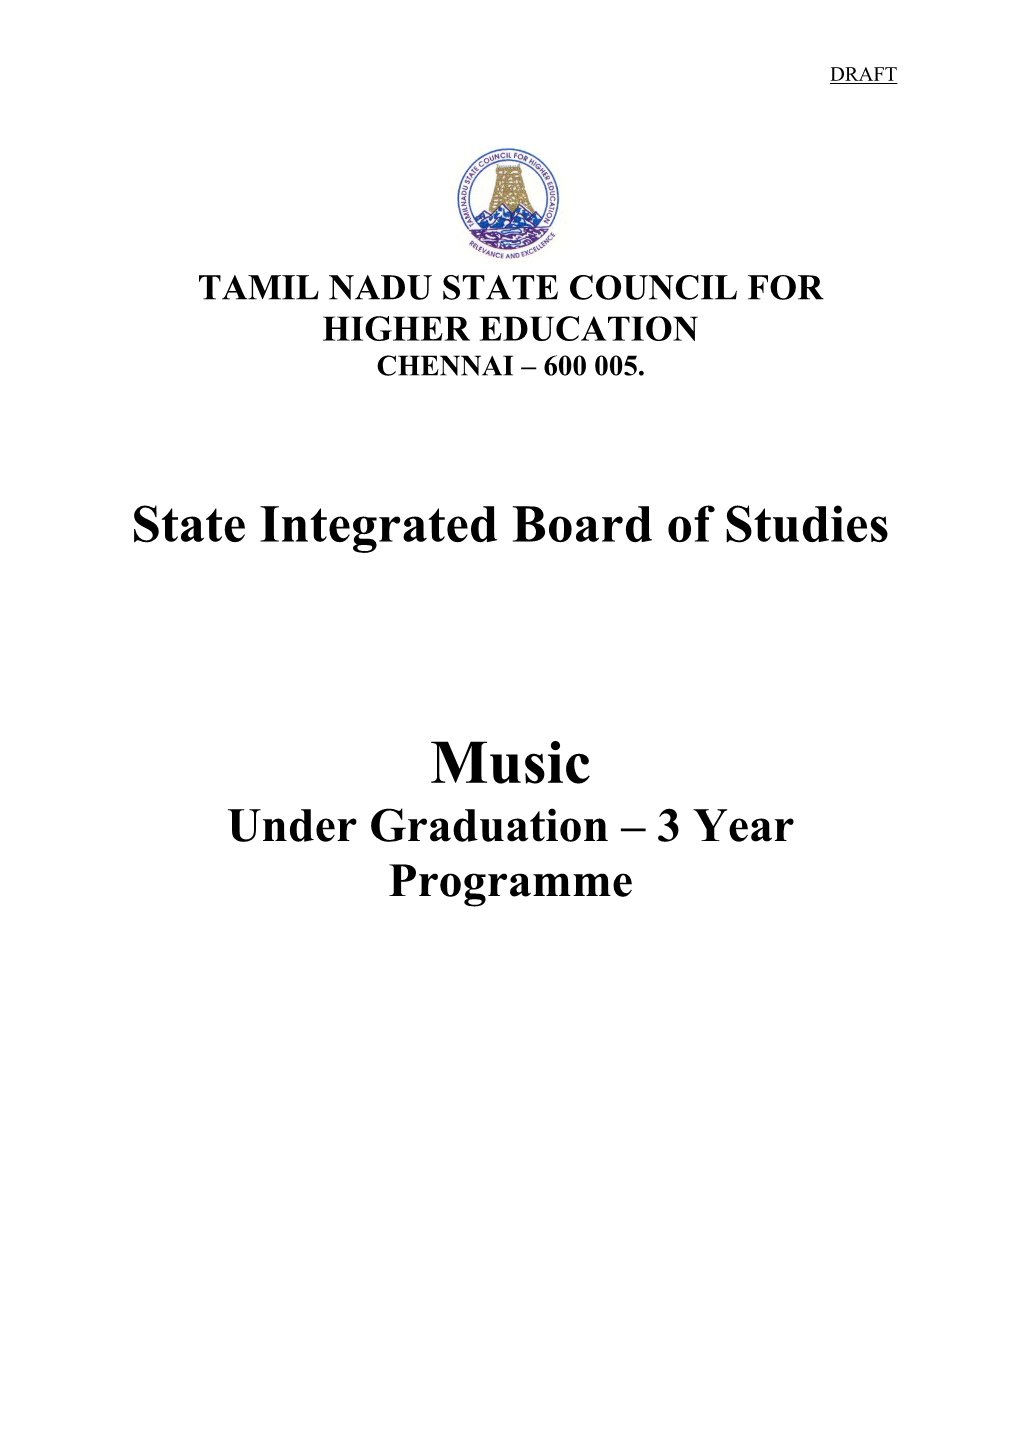 Music Under Graduation – 3 Year Programme